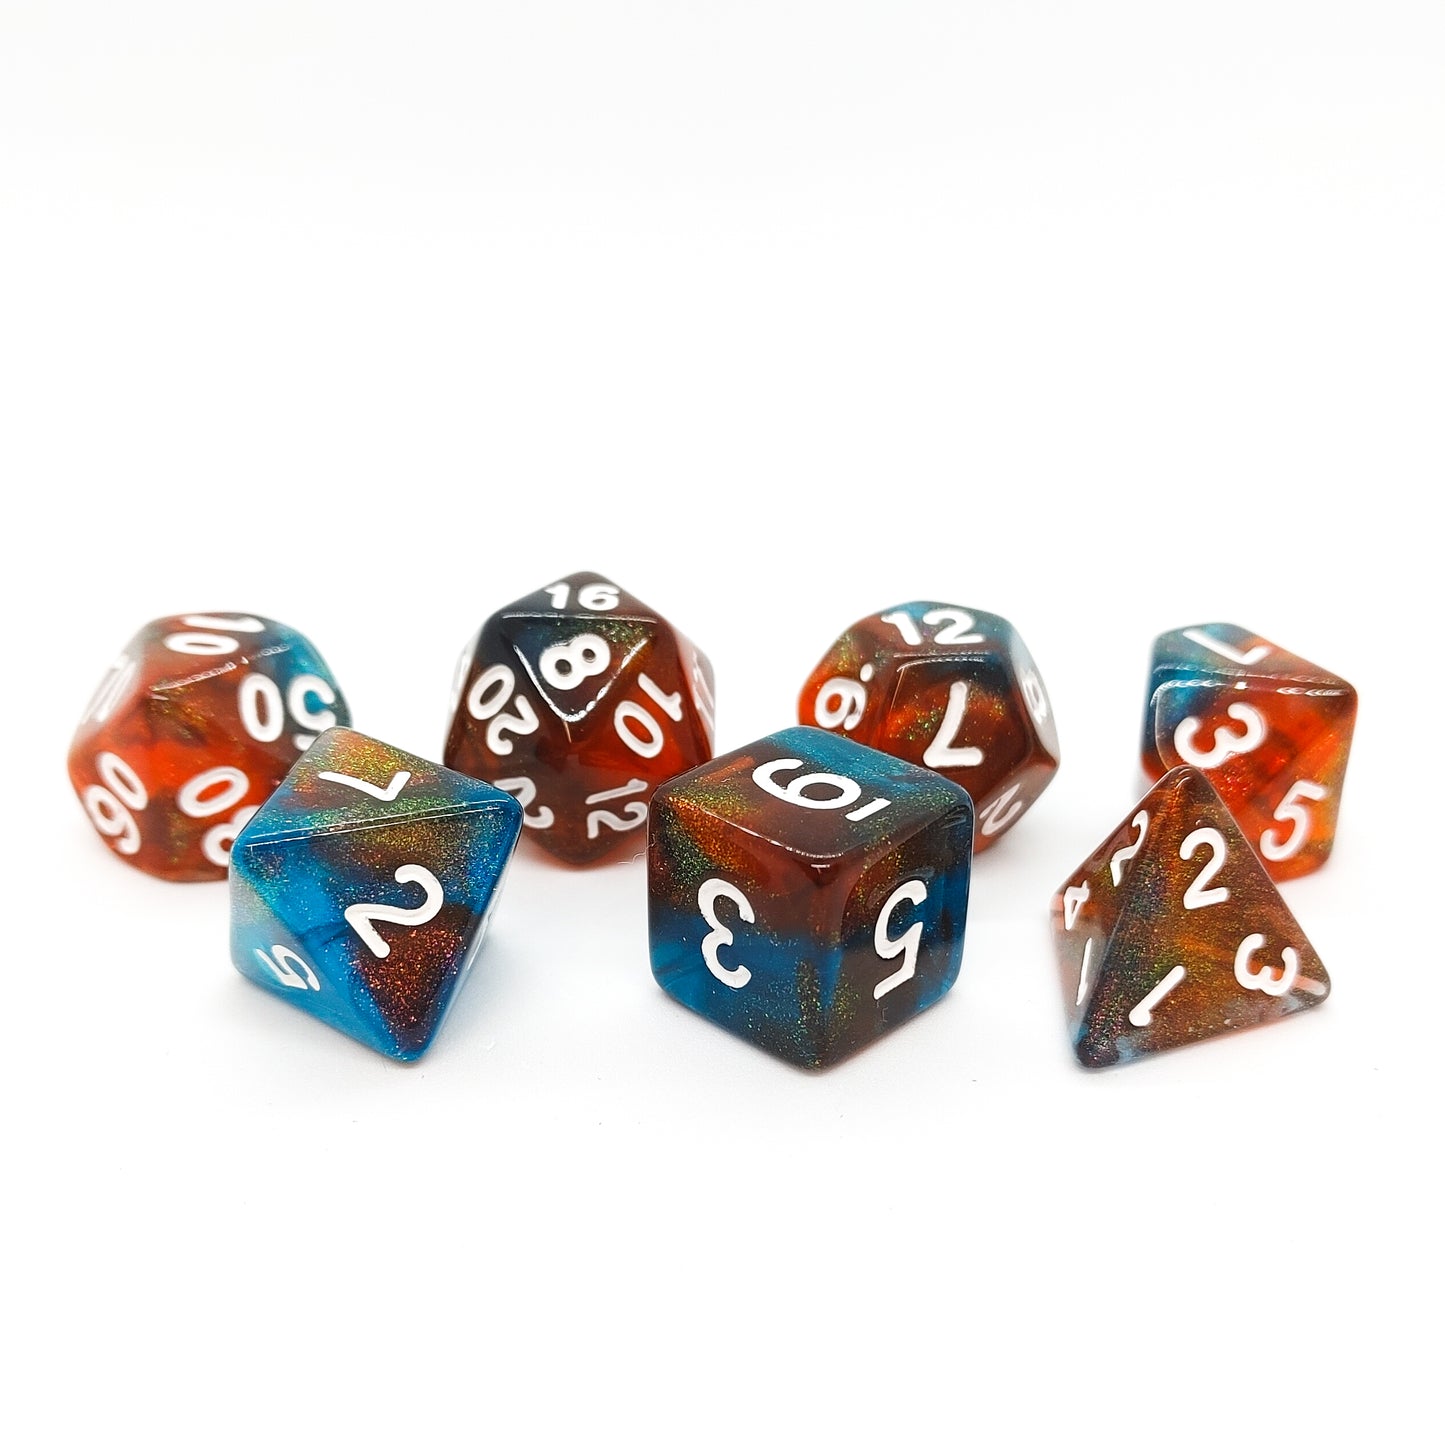 Fire and Ice - Iridescent dice set - 7 piece RPG dice set